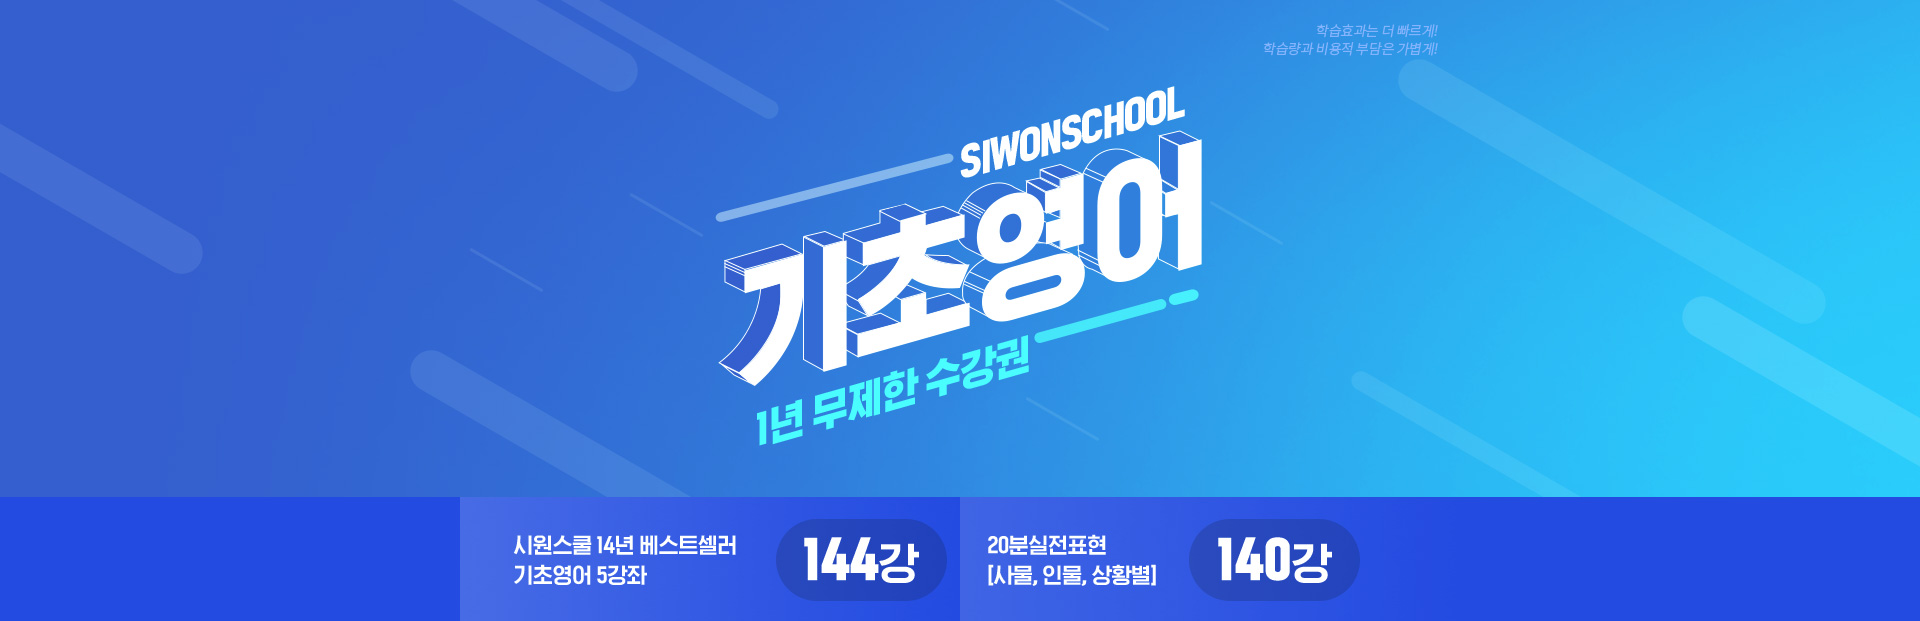 siwonschool 기초영어 1년 무제한 수강권